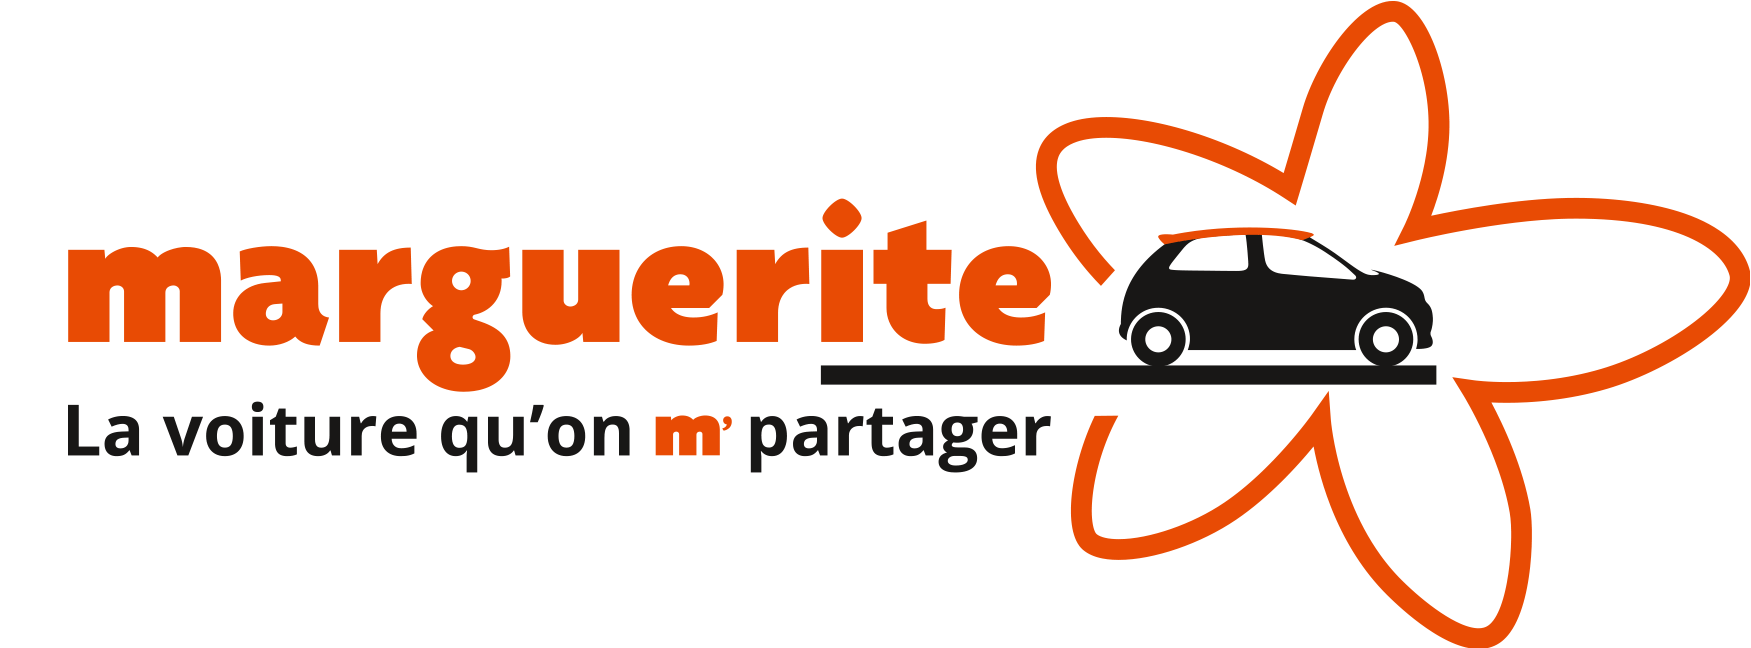 Logo Marguerite